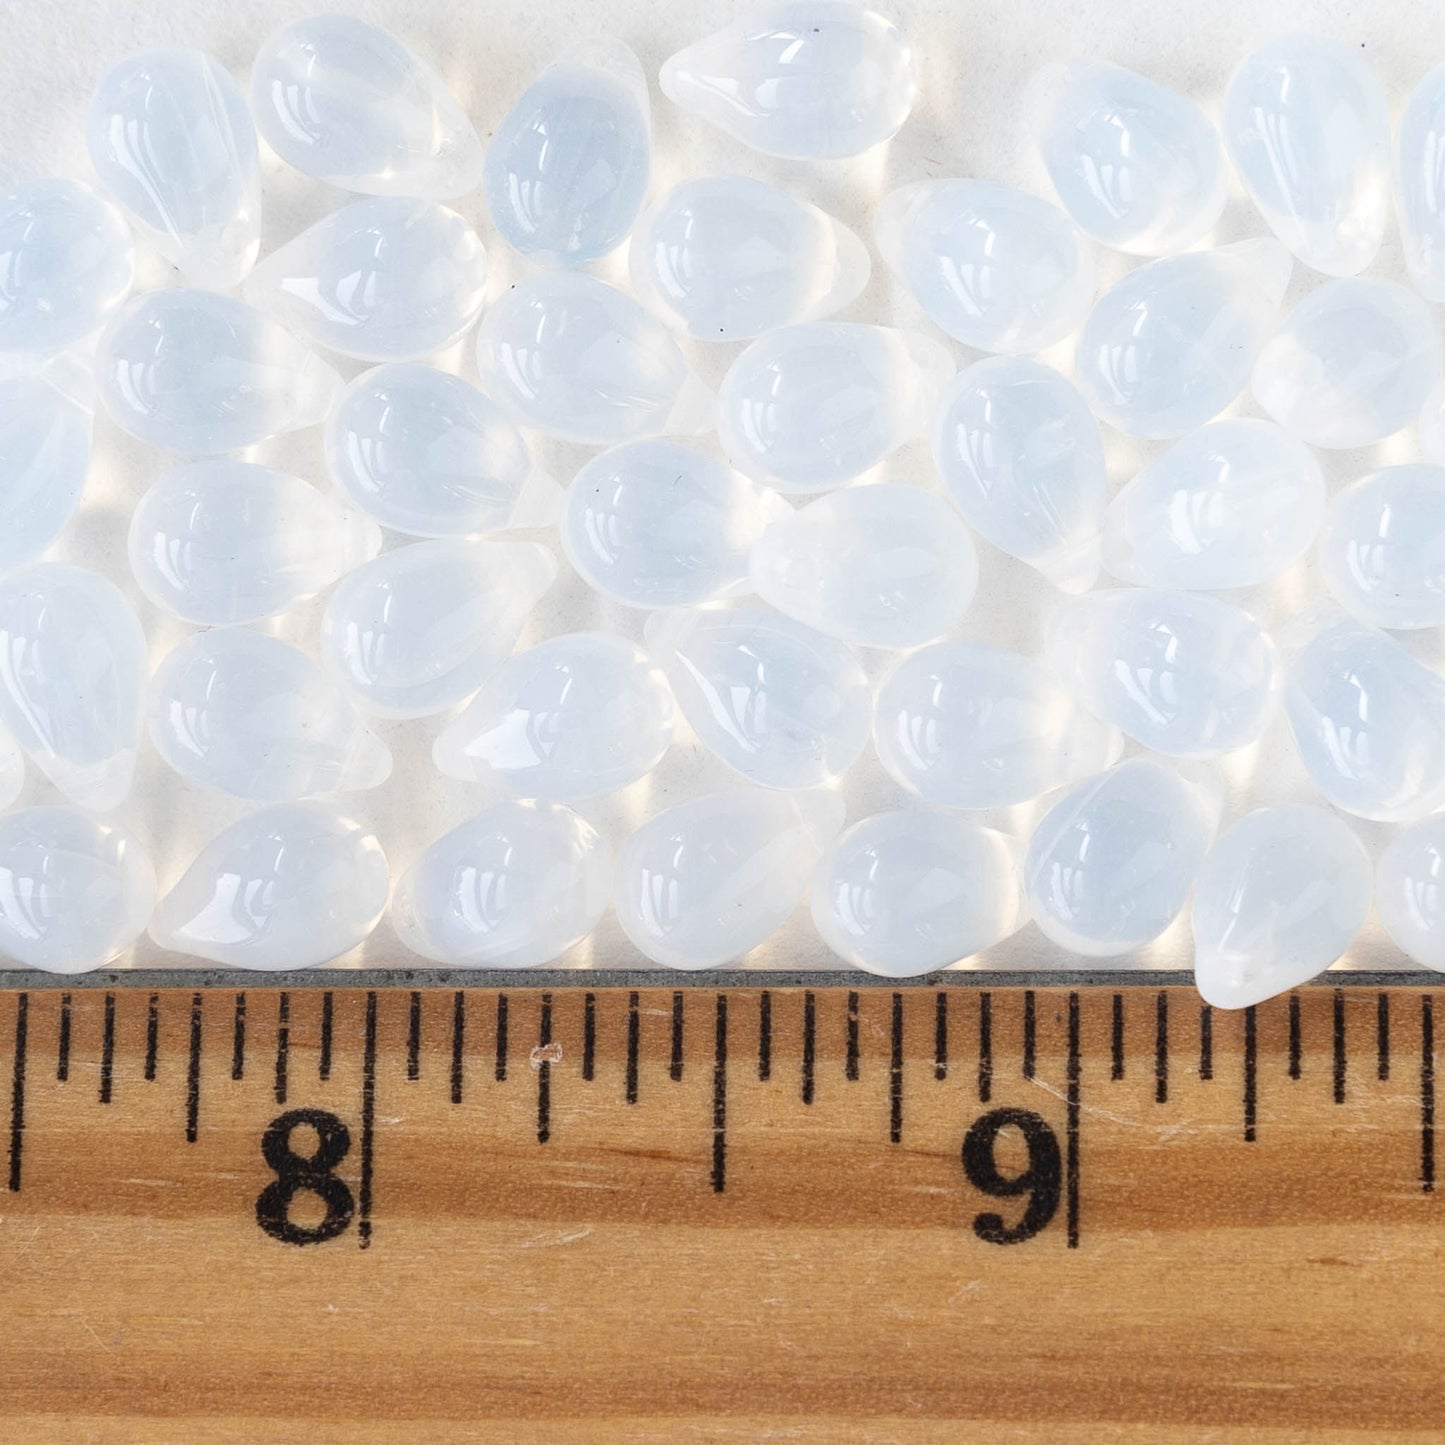 6x9mm Glass Teardrop Beads - Opaline - 50 Beads